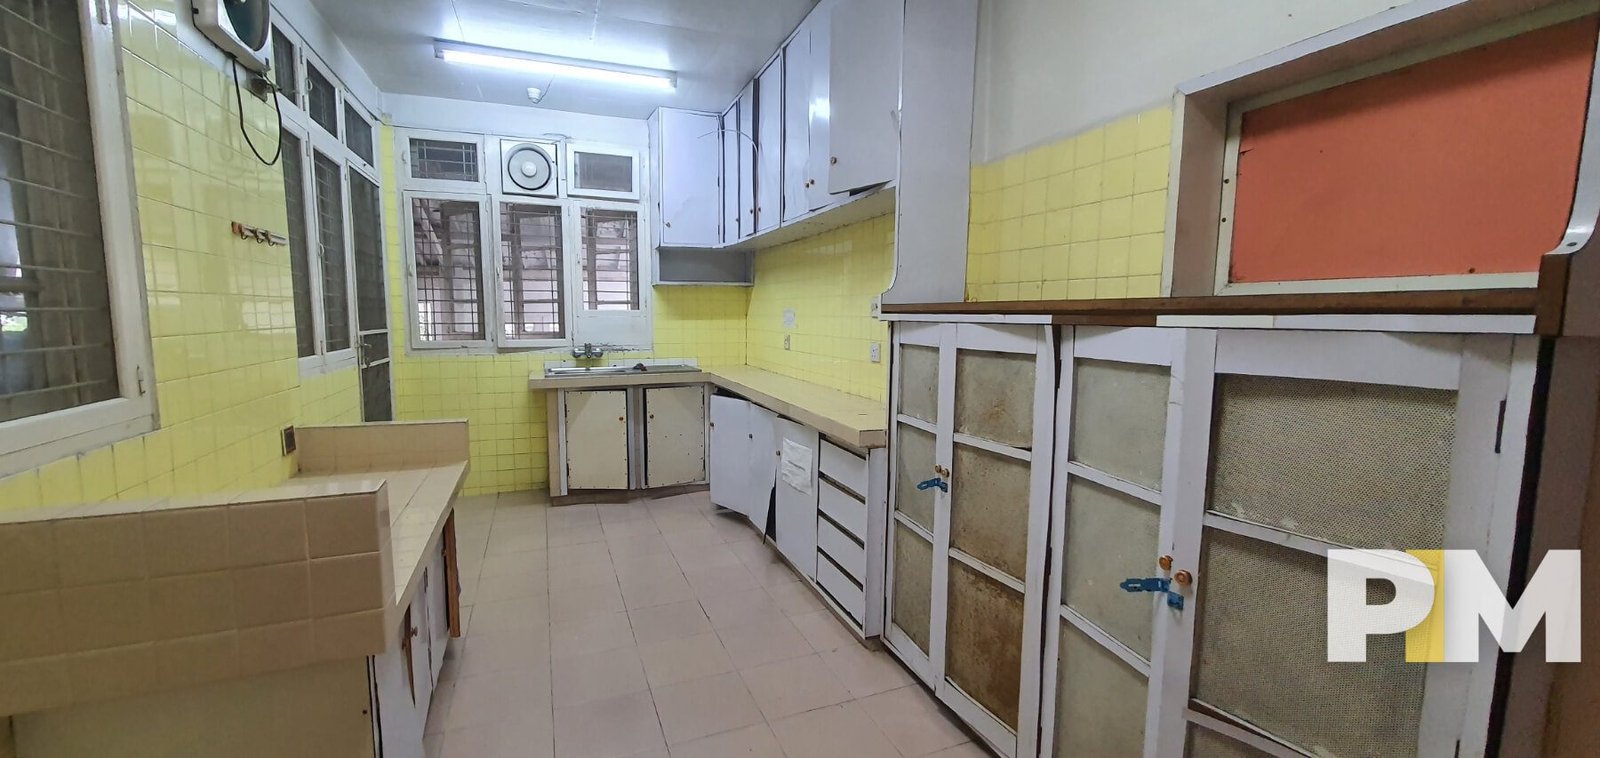 kitchen - properties in yangon